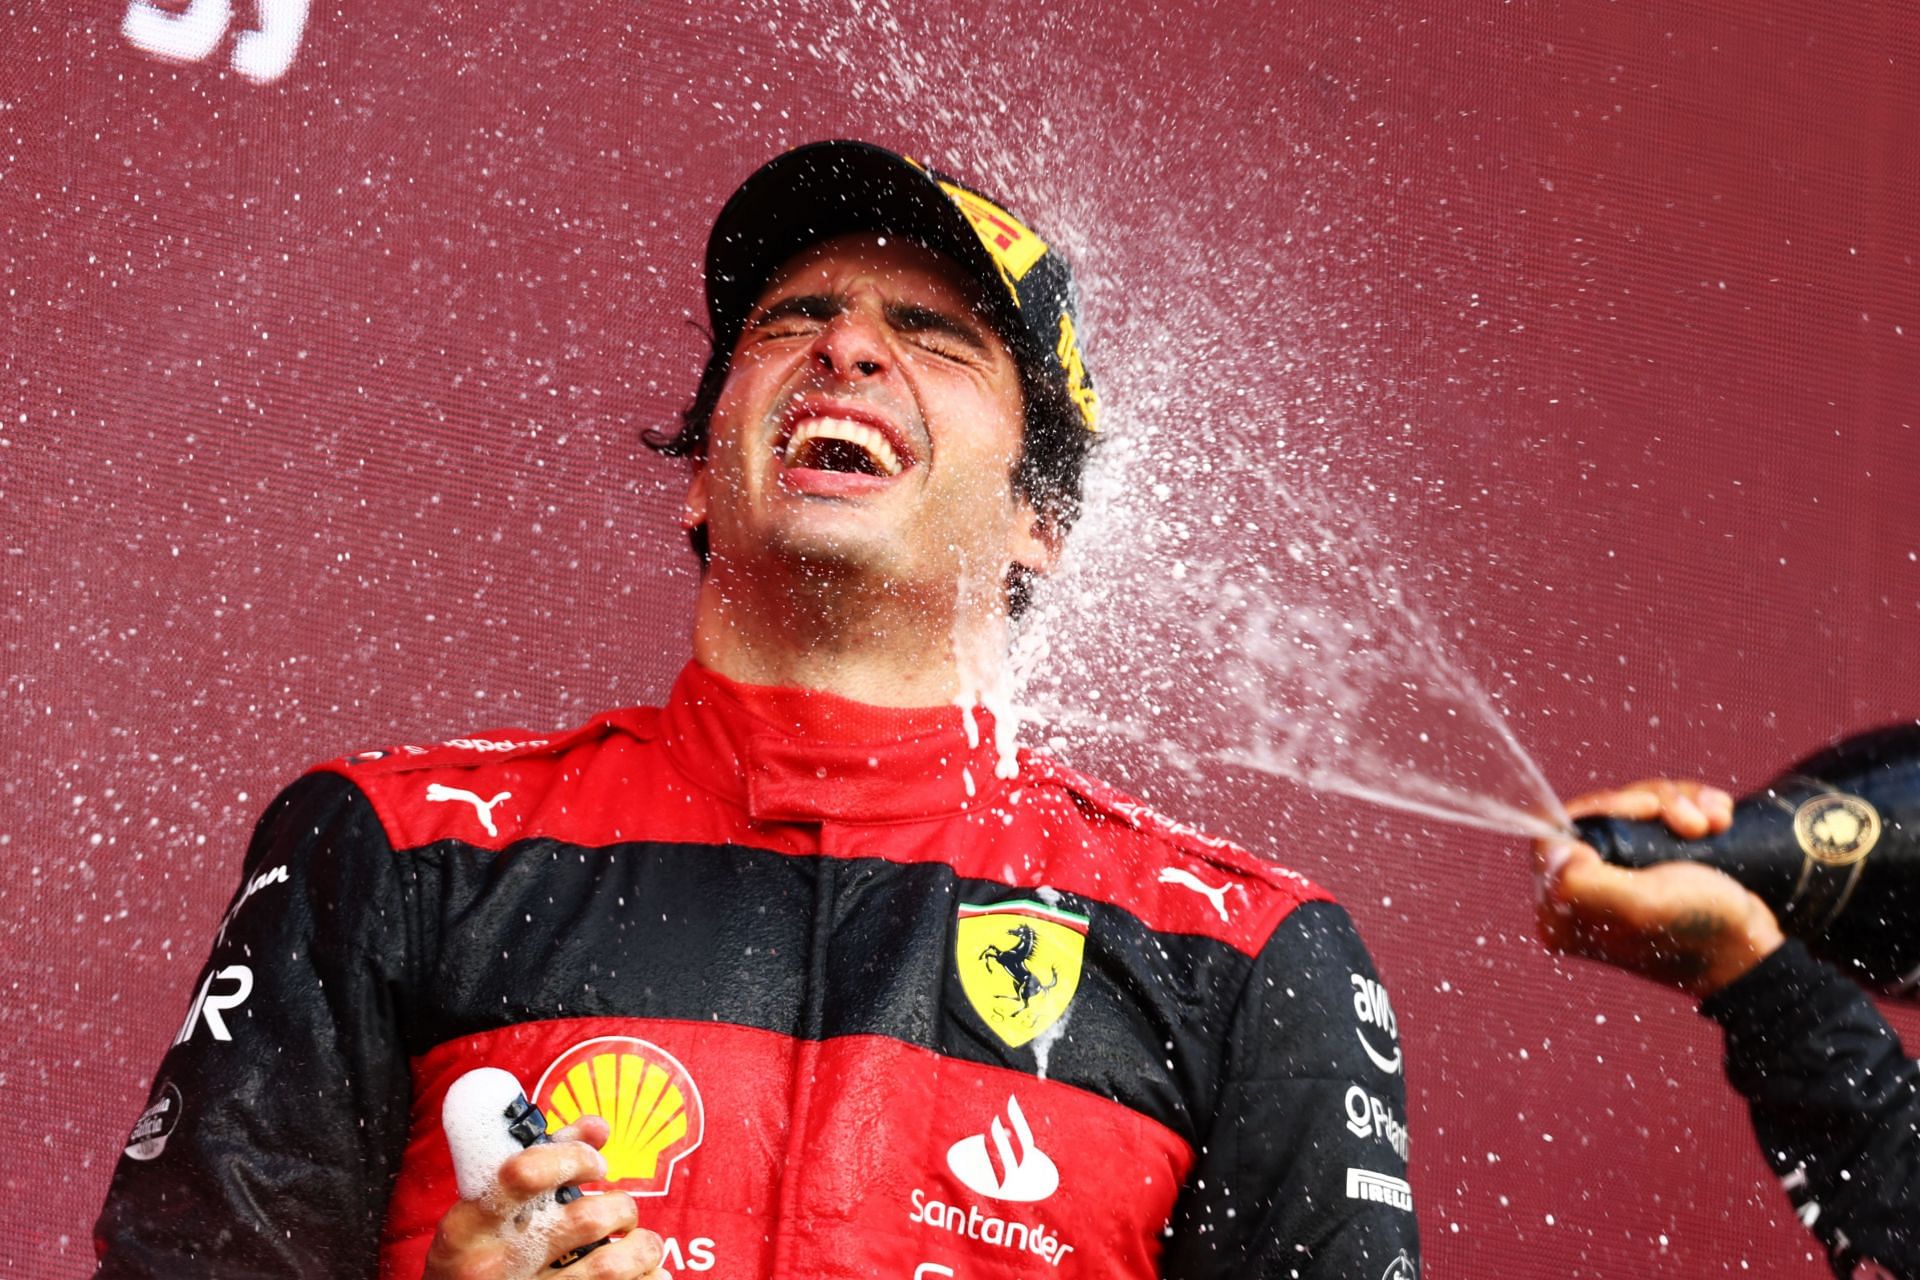 Carlos Sainz celebrates on the podium after winning the 2022 F1 Grand Prix of Great Britain